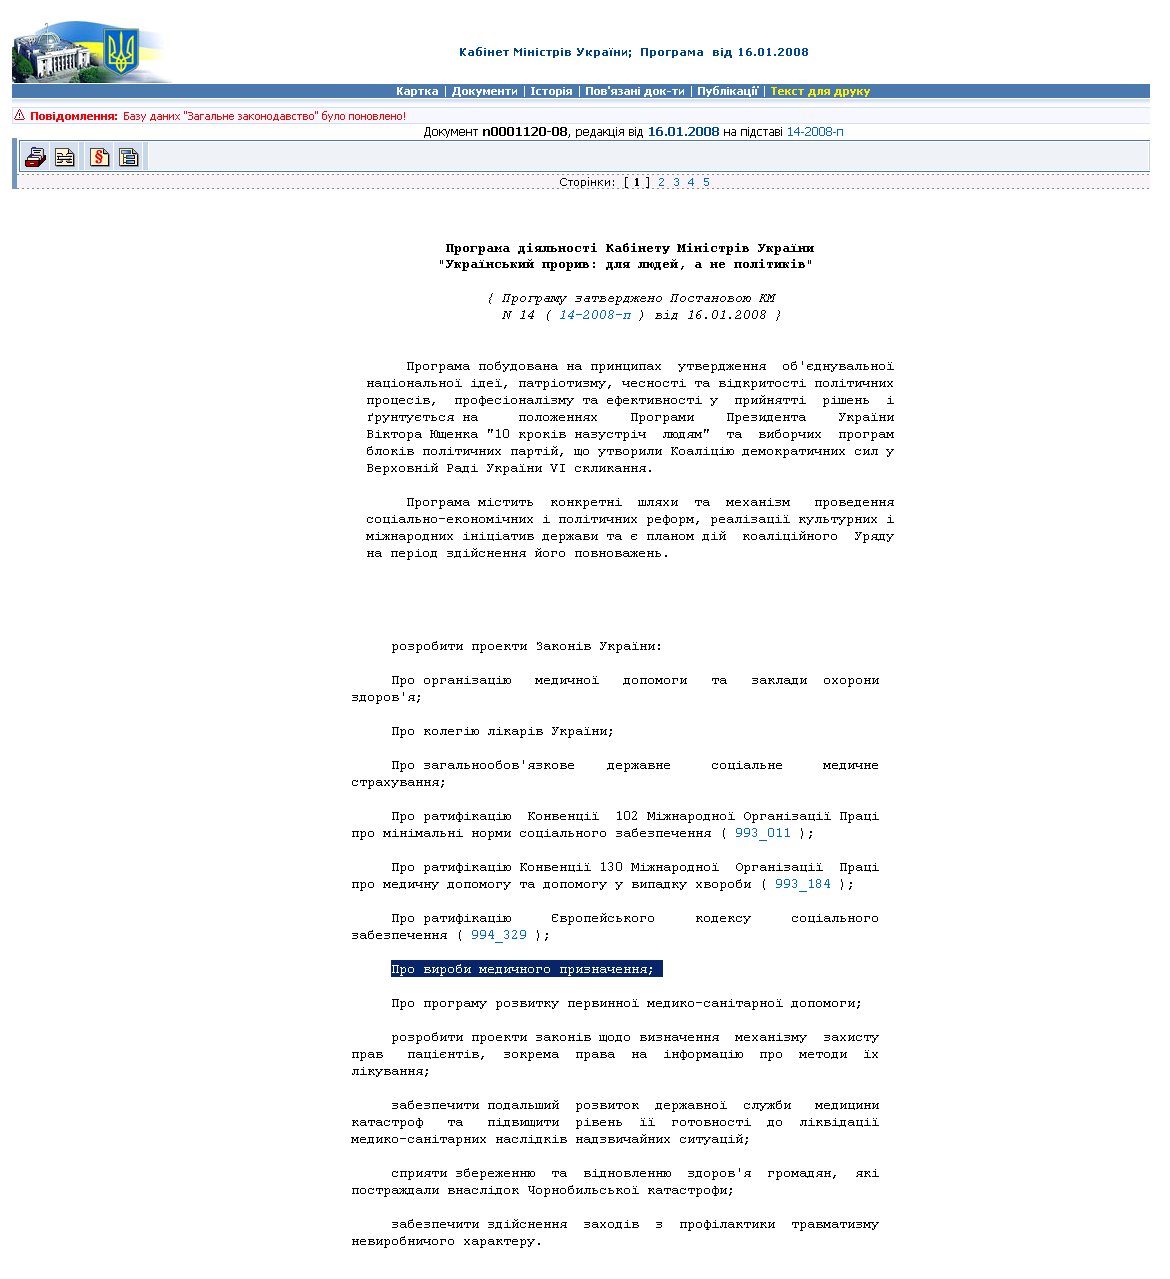 http://zakon1.rada.gov.ua/cgi-bin/laws/main.cgi?page=1&nreg=n0001120-08